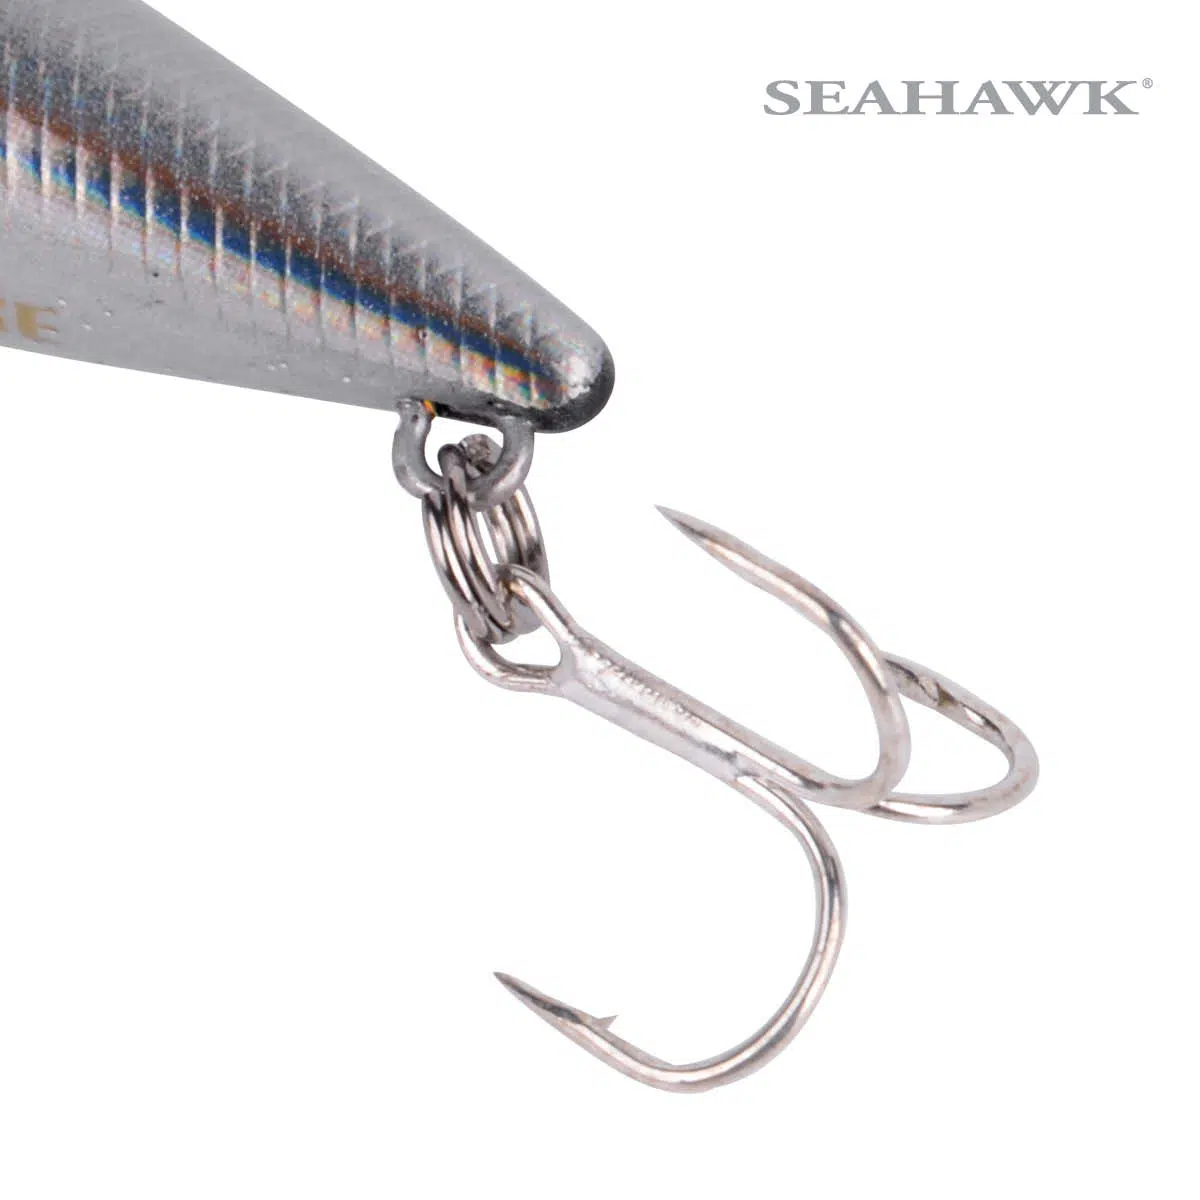 Seahawk Fishing Malaysia Sabiki 2626 - White Feathers and Flash Fibre